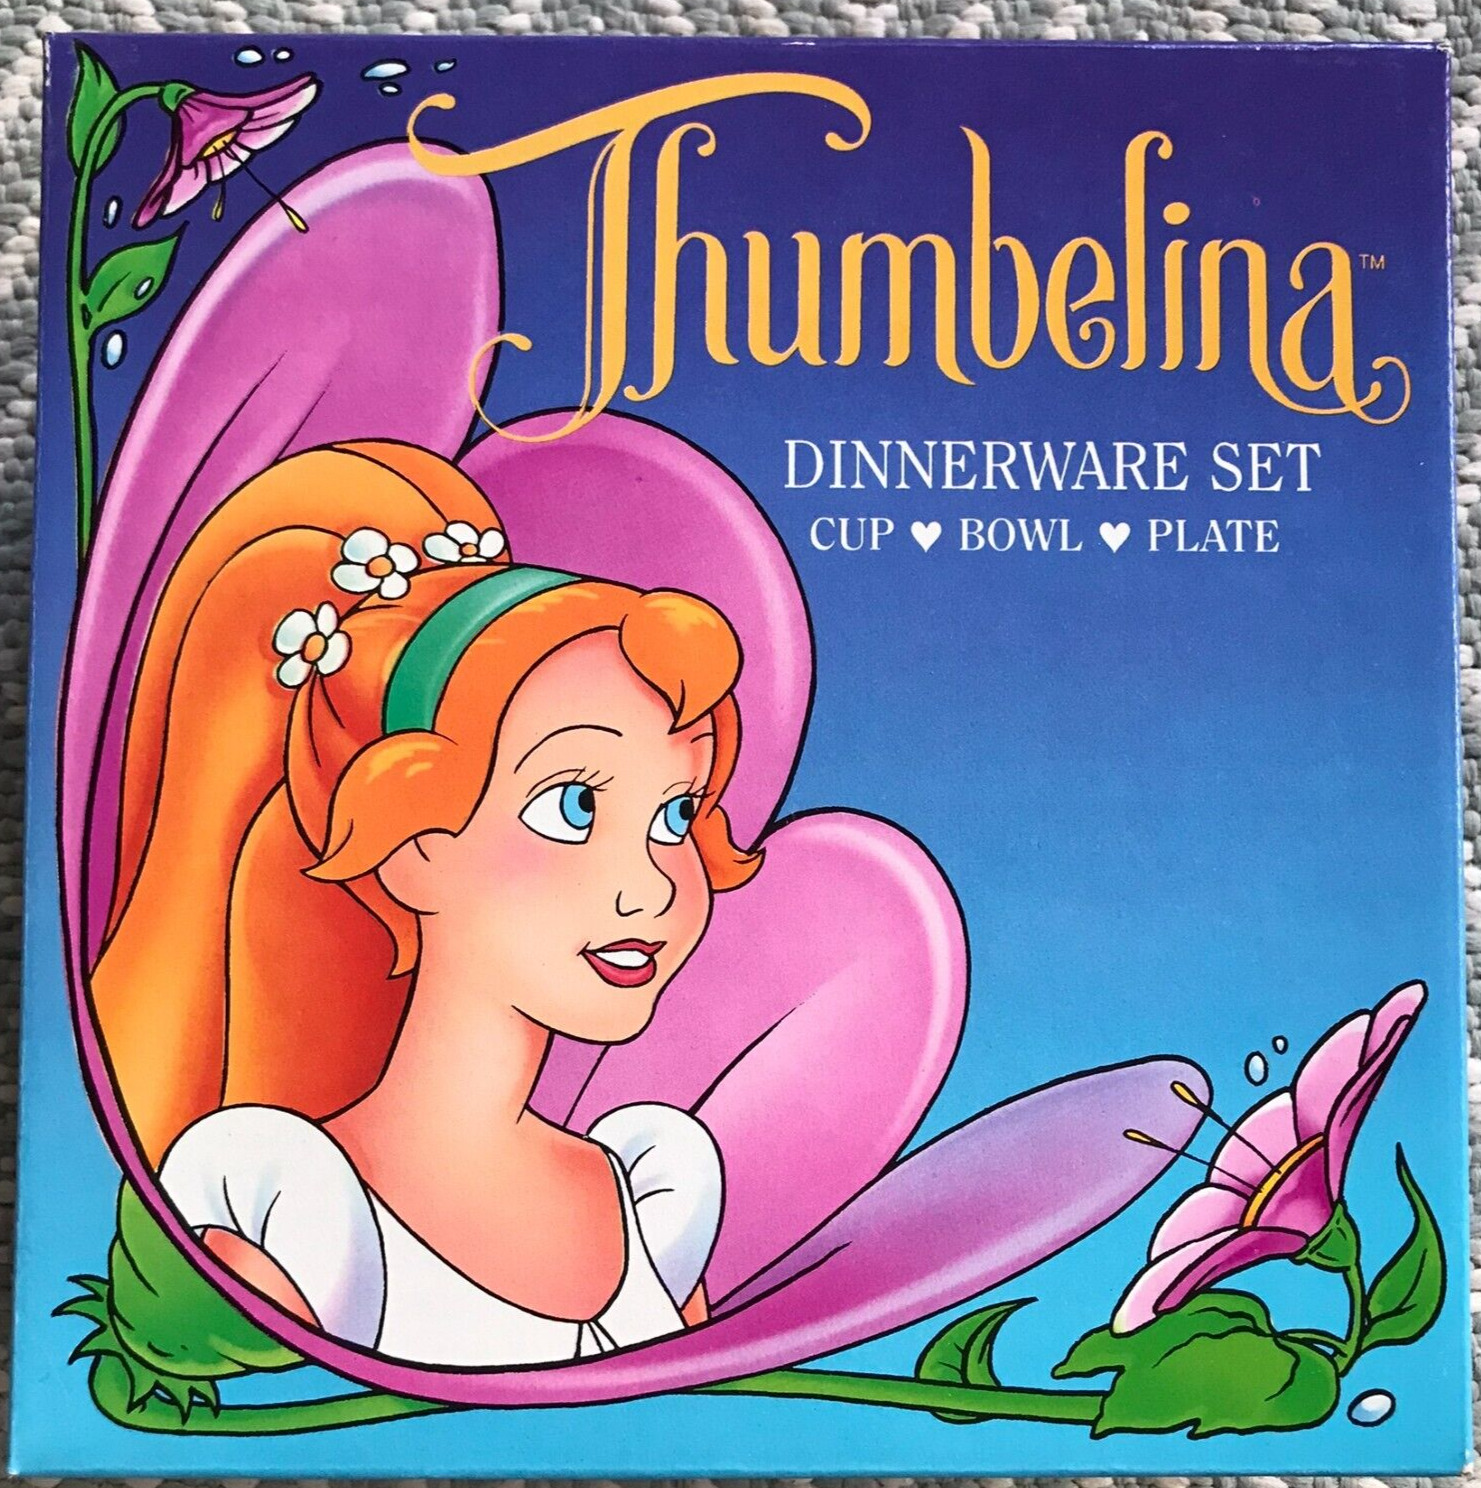 Rare Vintage 1993 Thumbelina Dinnerware Set - New in Box